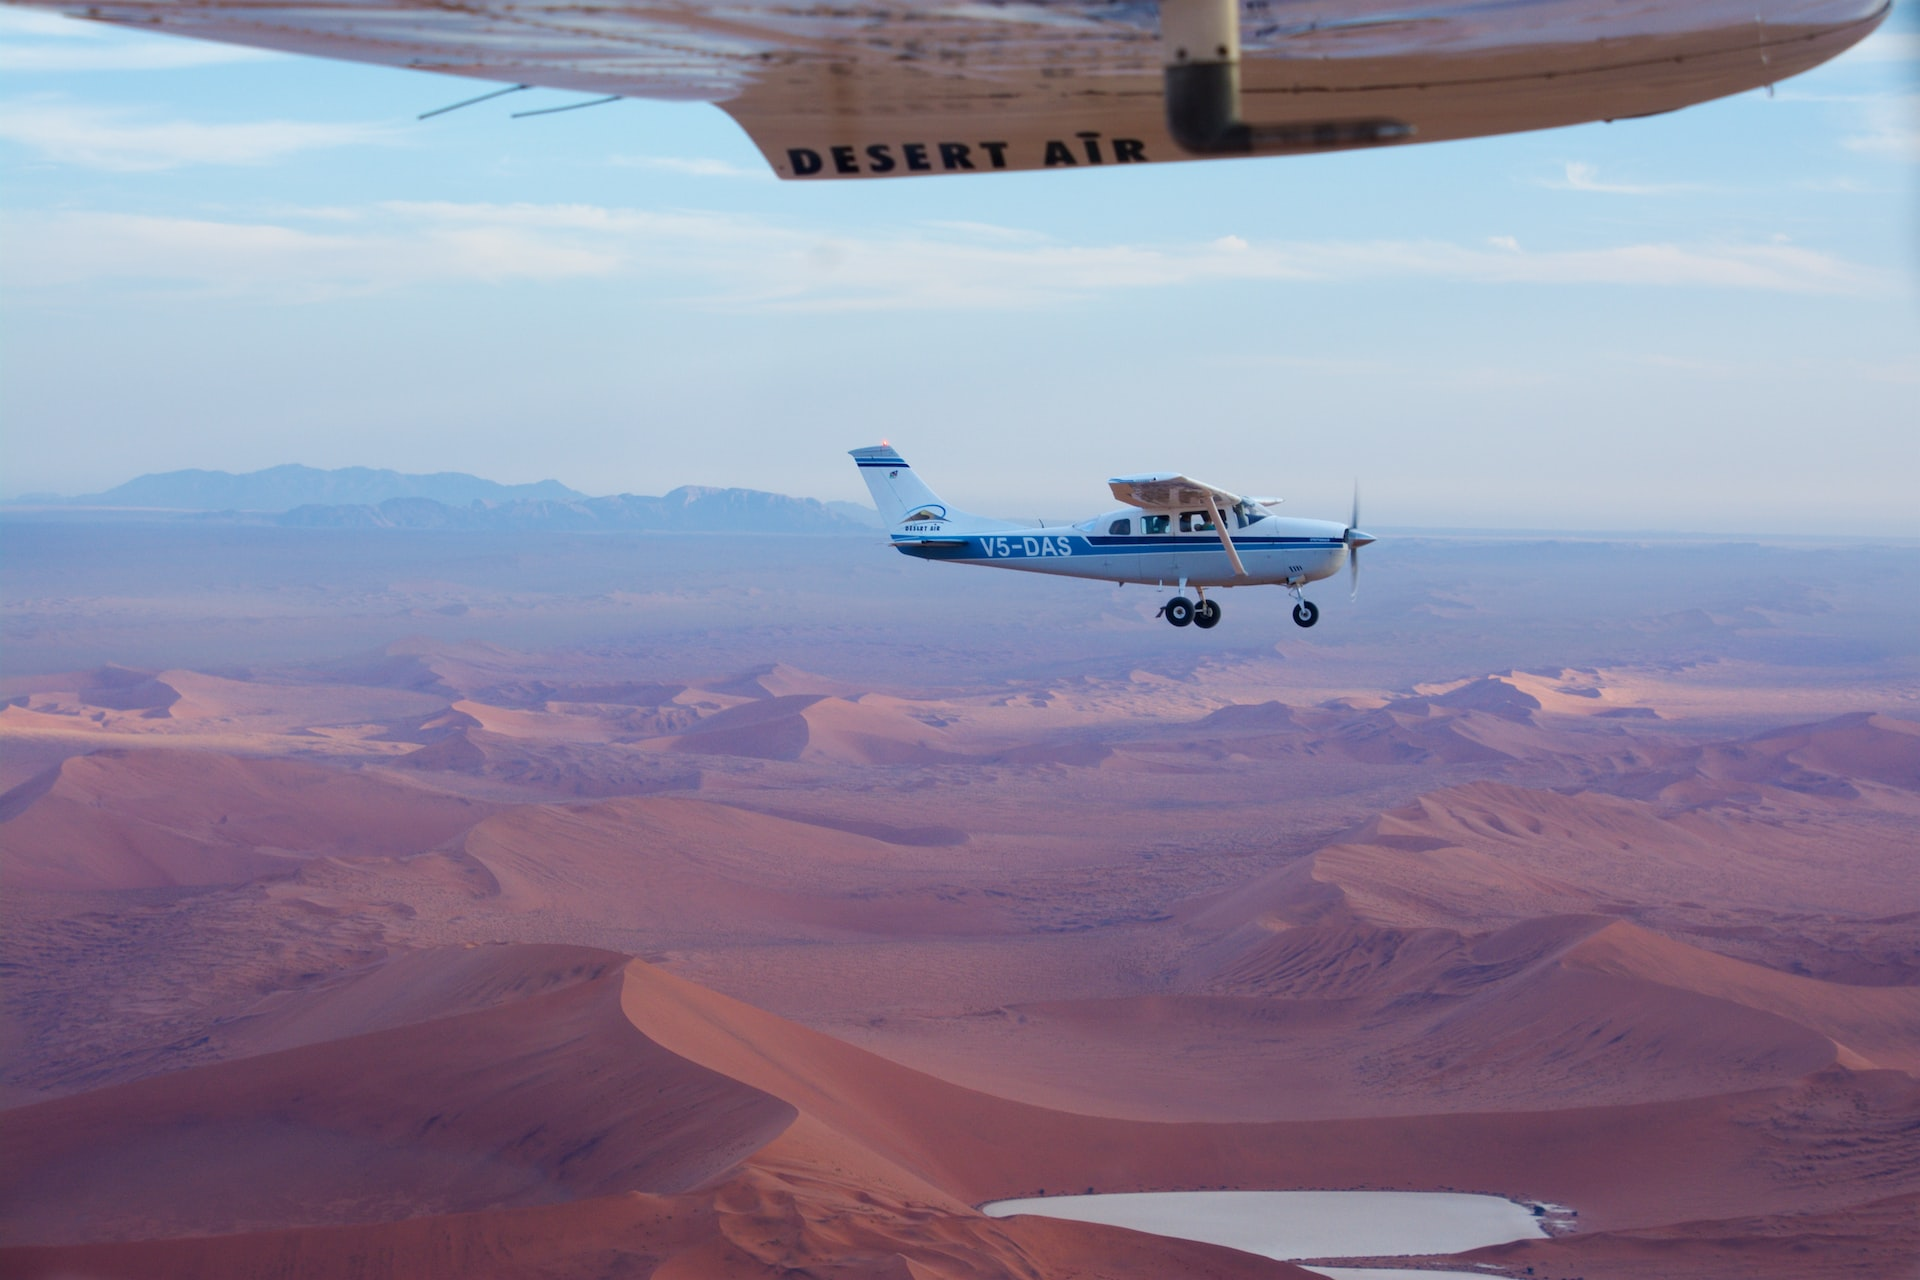 Two Desert Air airplanes scud running over the Namibian Desert. 